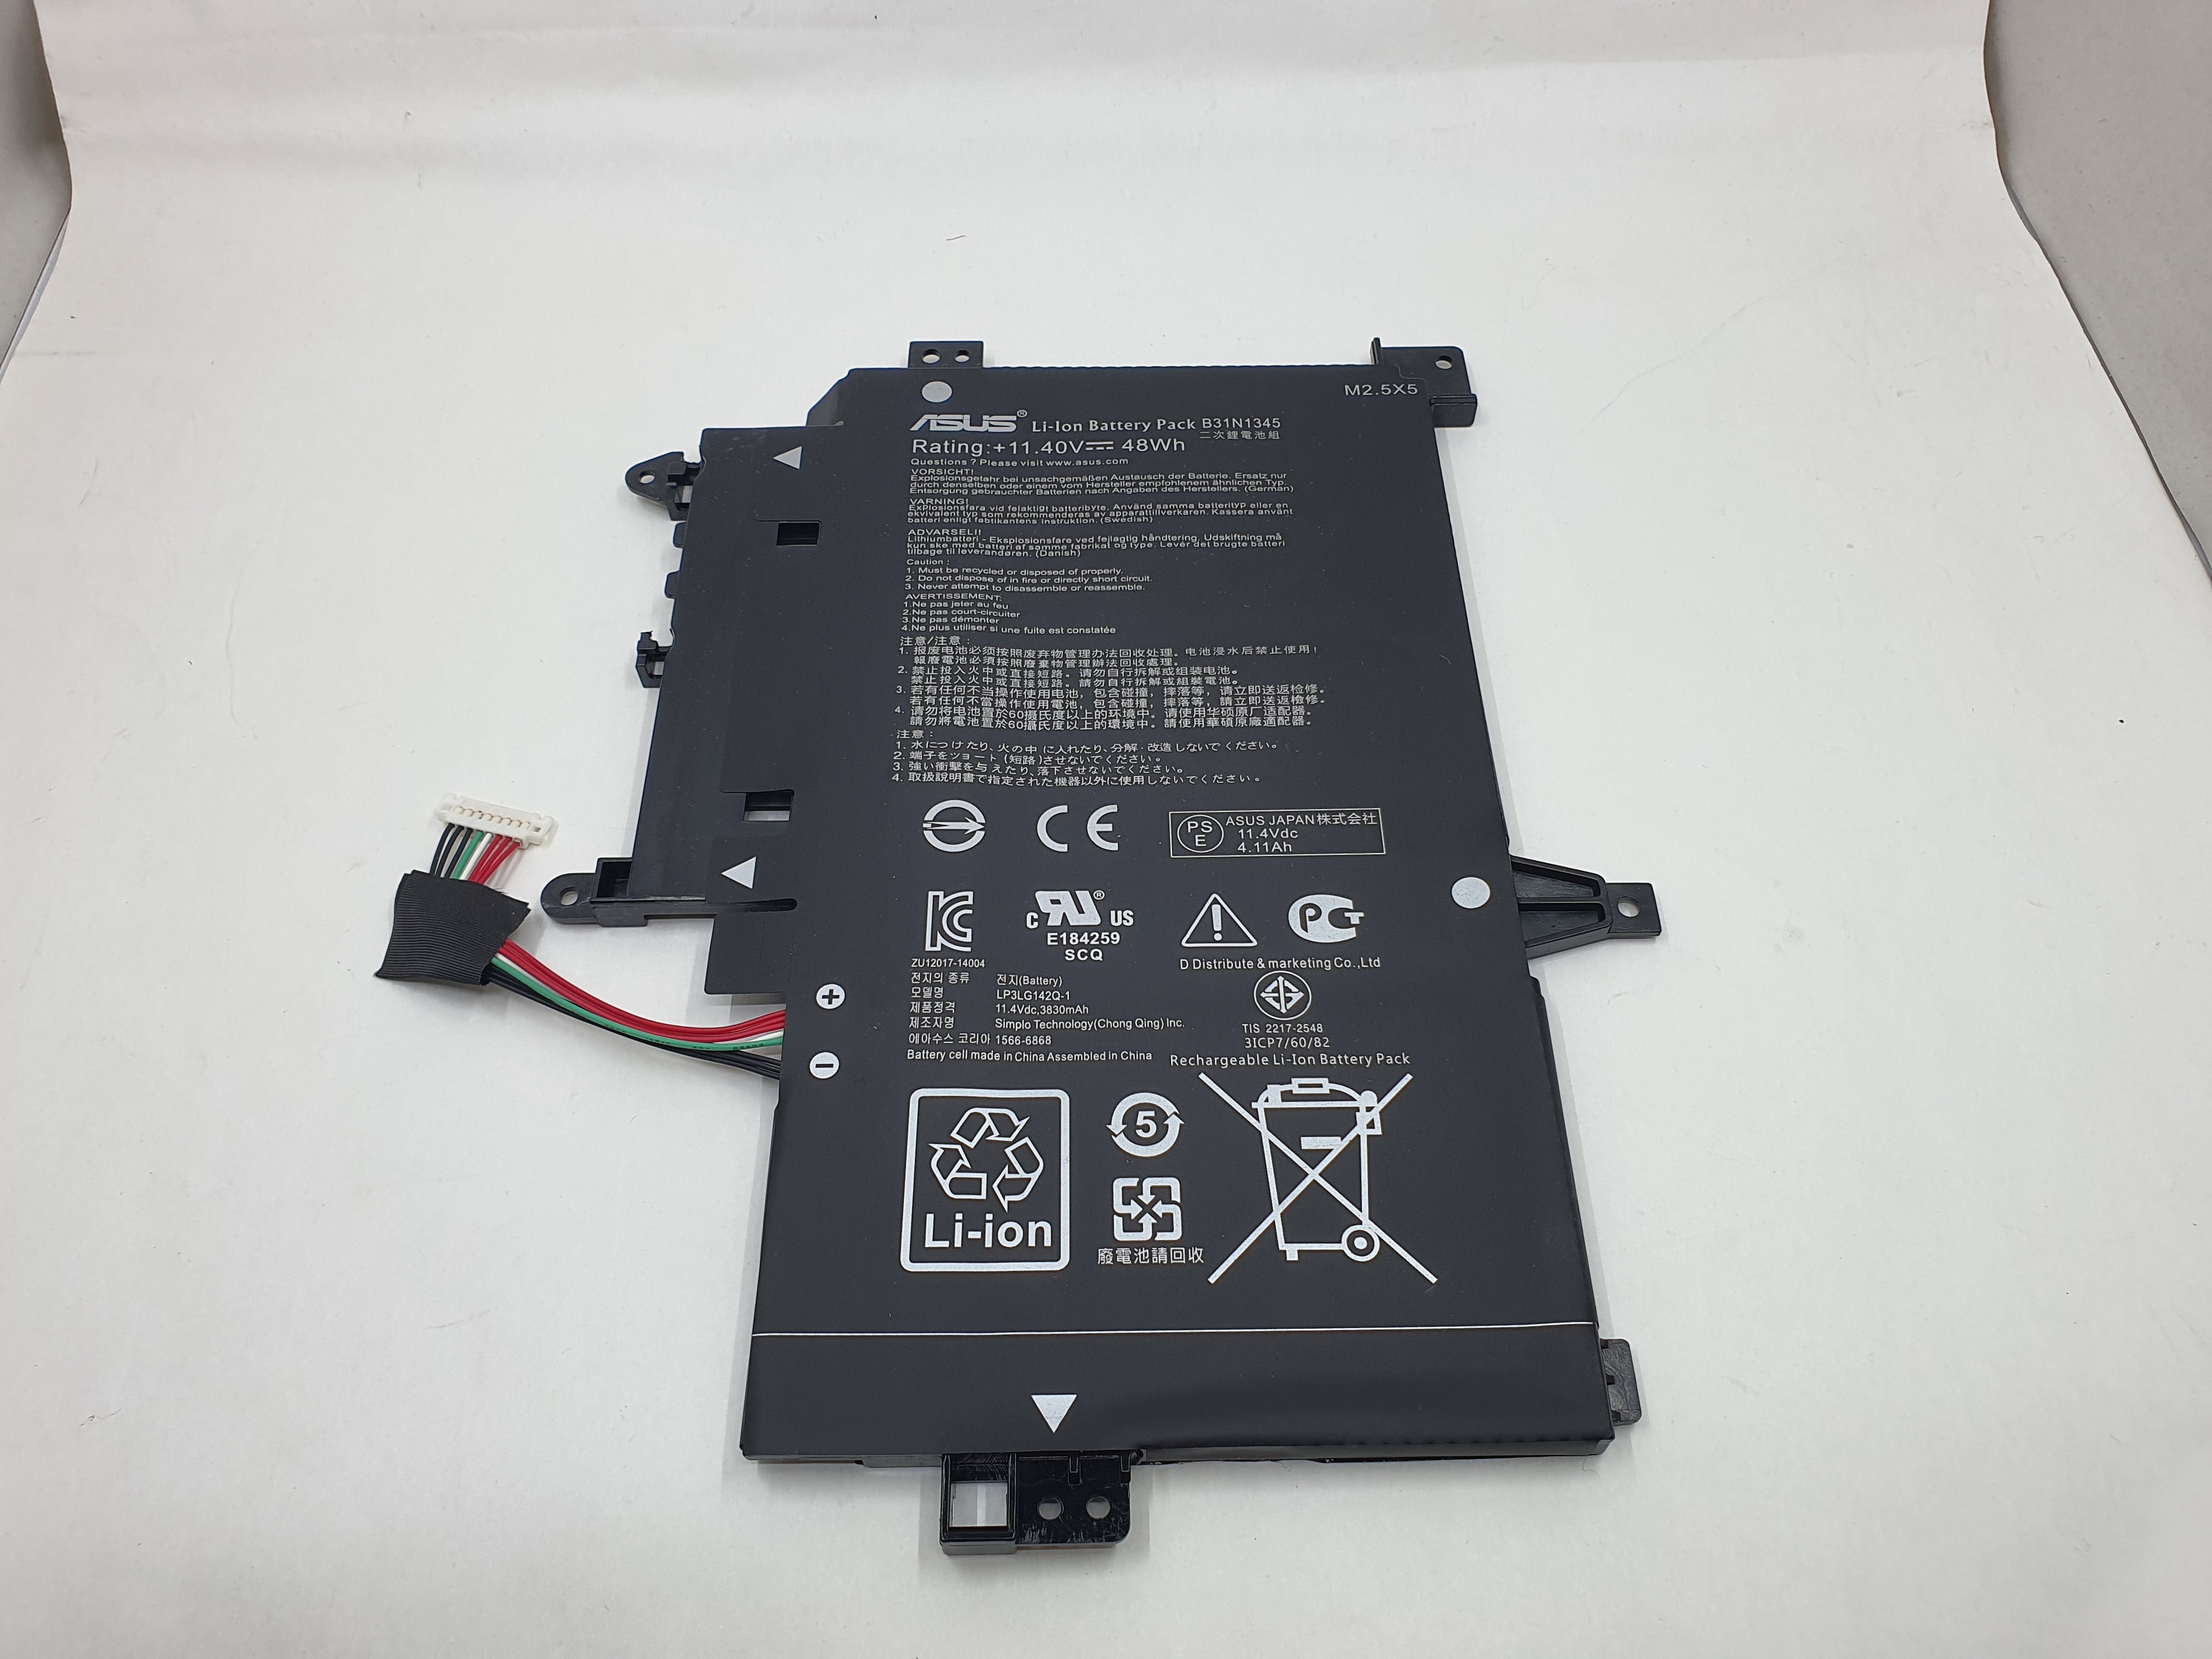 Asus Battery TP500L A1 for Asus Transformer Book Flip TP500L